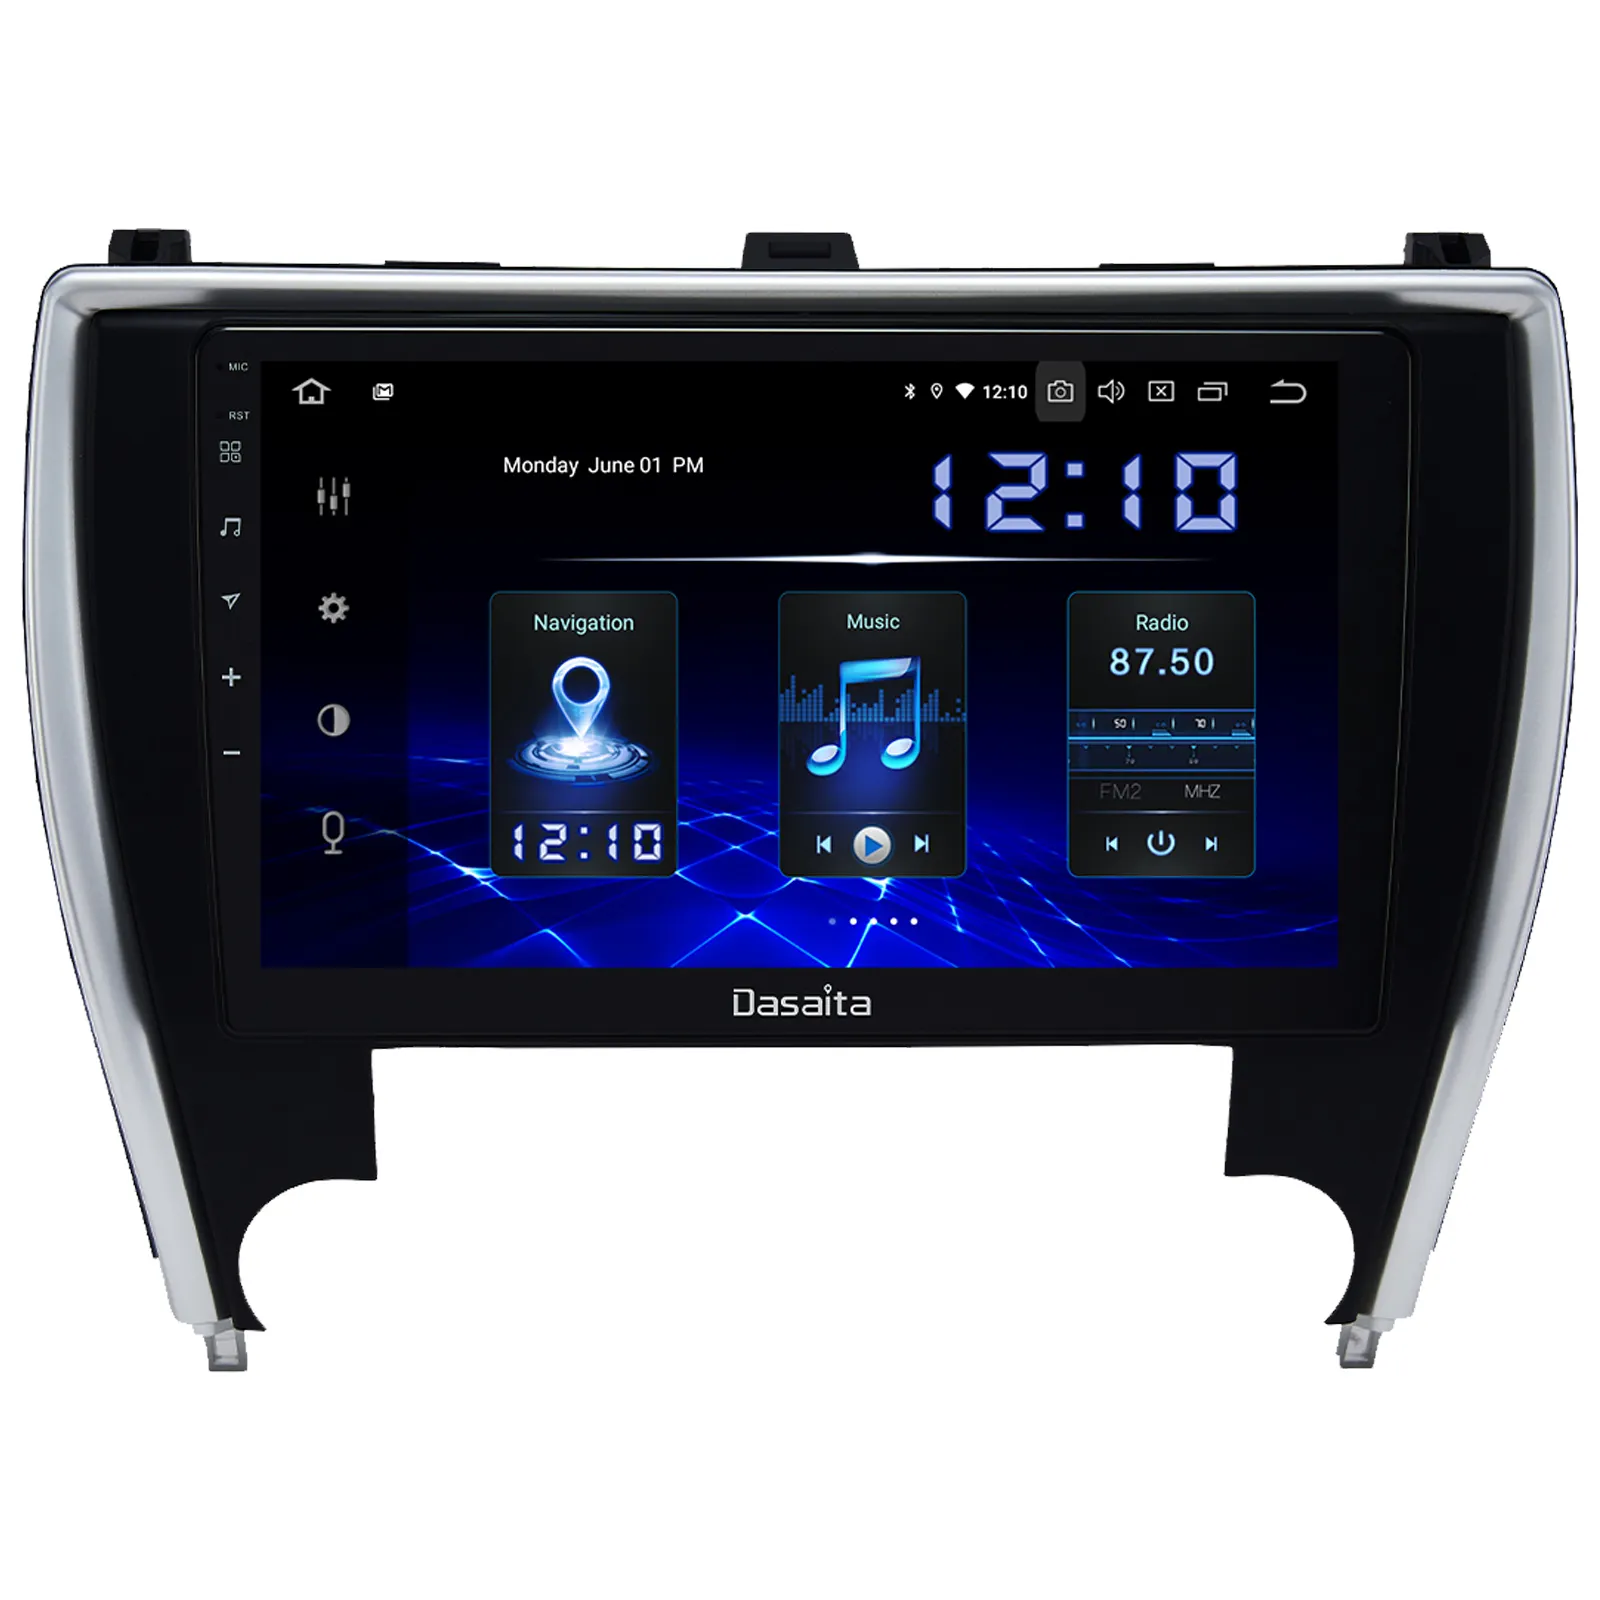 Dasaita MAX10 لتويوتا كامري 2015 2016 2017 الروبوت 10 مشغل أسطوانات للسيارة لاعب مع USB واي فاي لتحديد المواقع والملاحة spotify راديو للسيارة